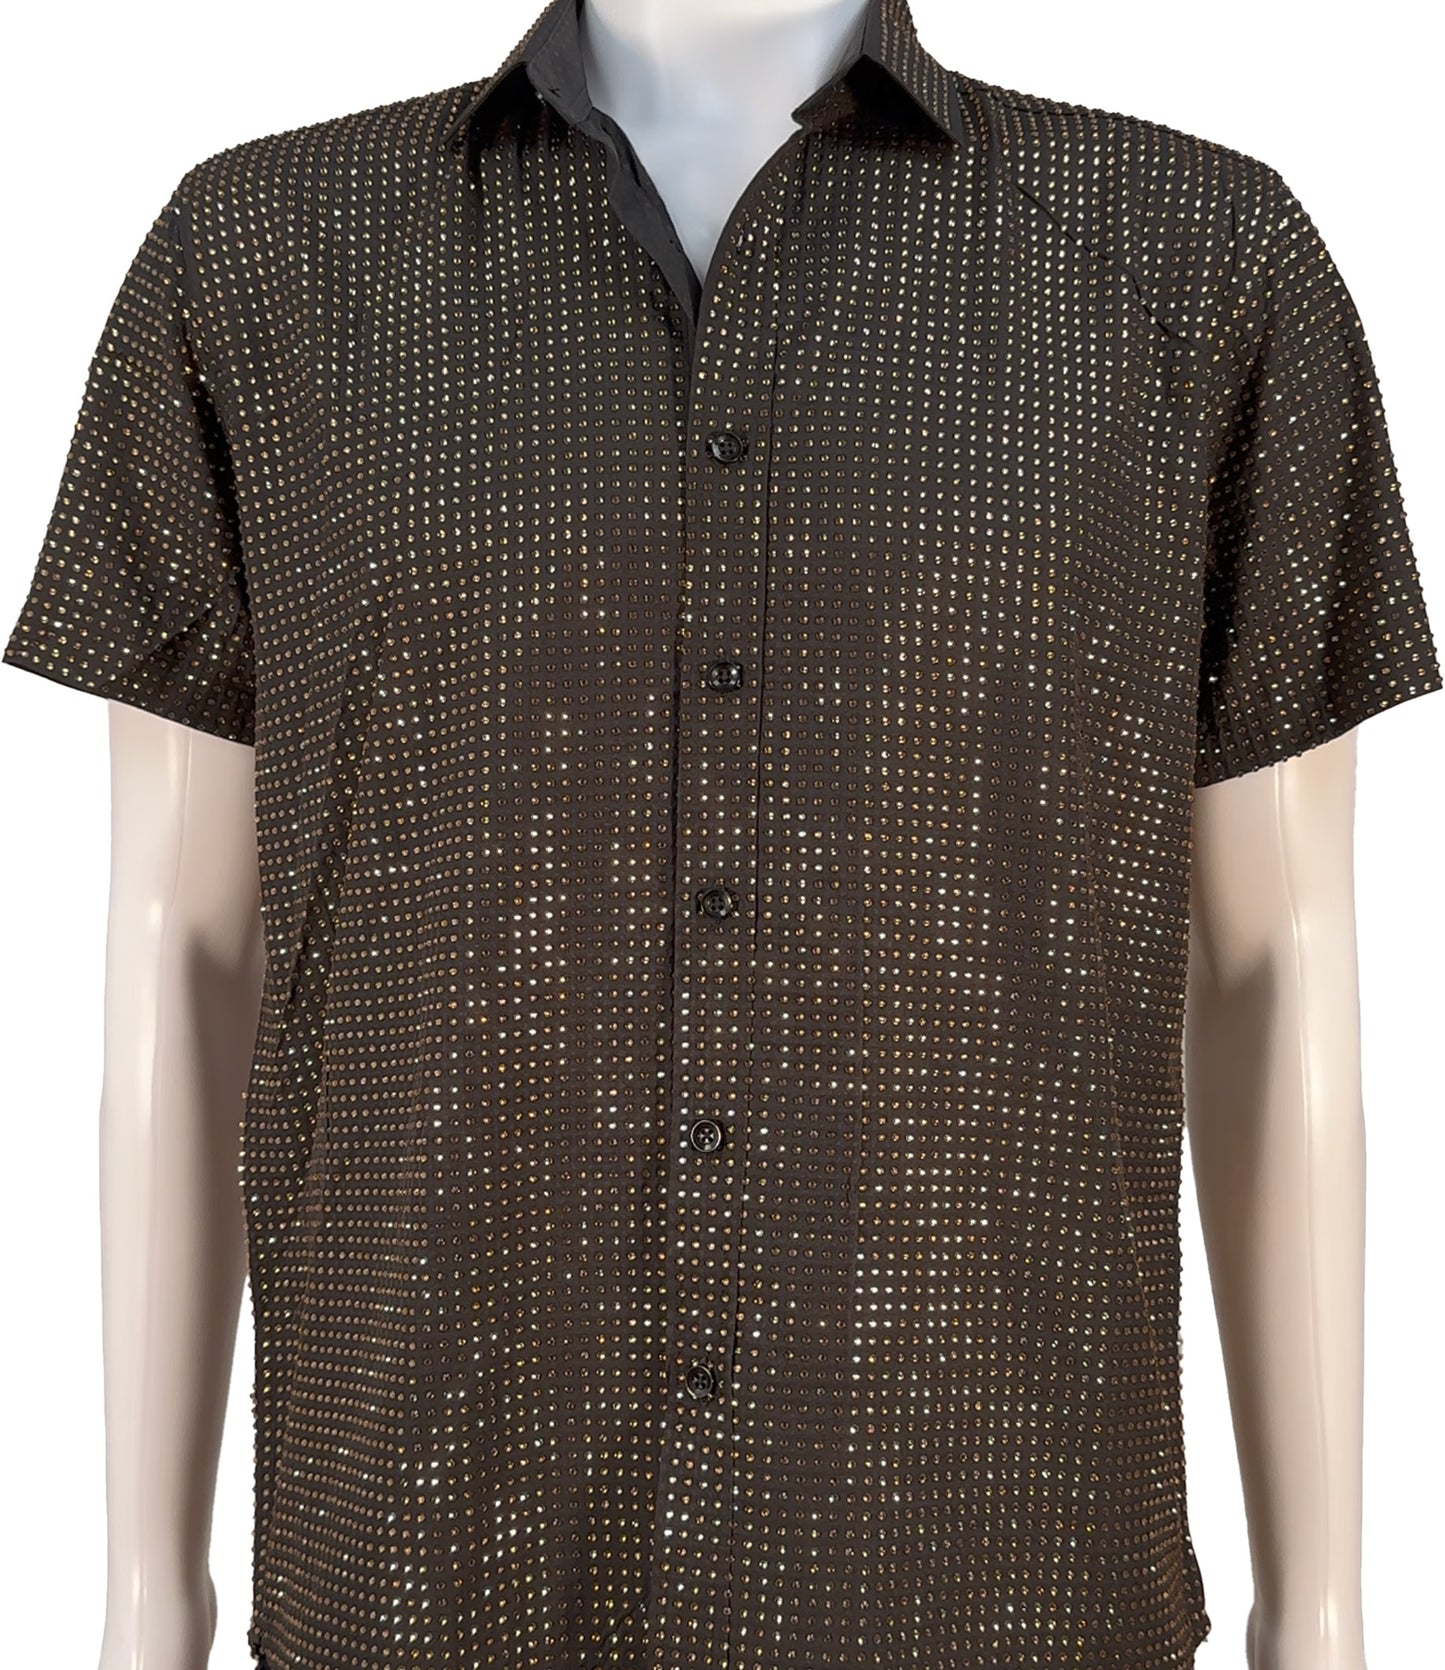 Gold Crystals on Black Fabric Dress Shirt (Short Sleeves)